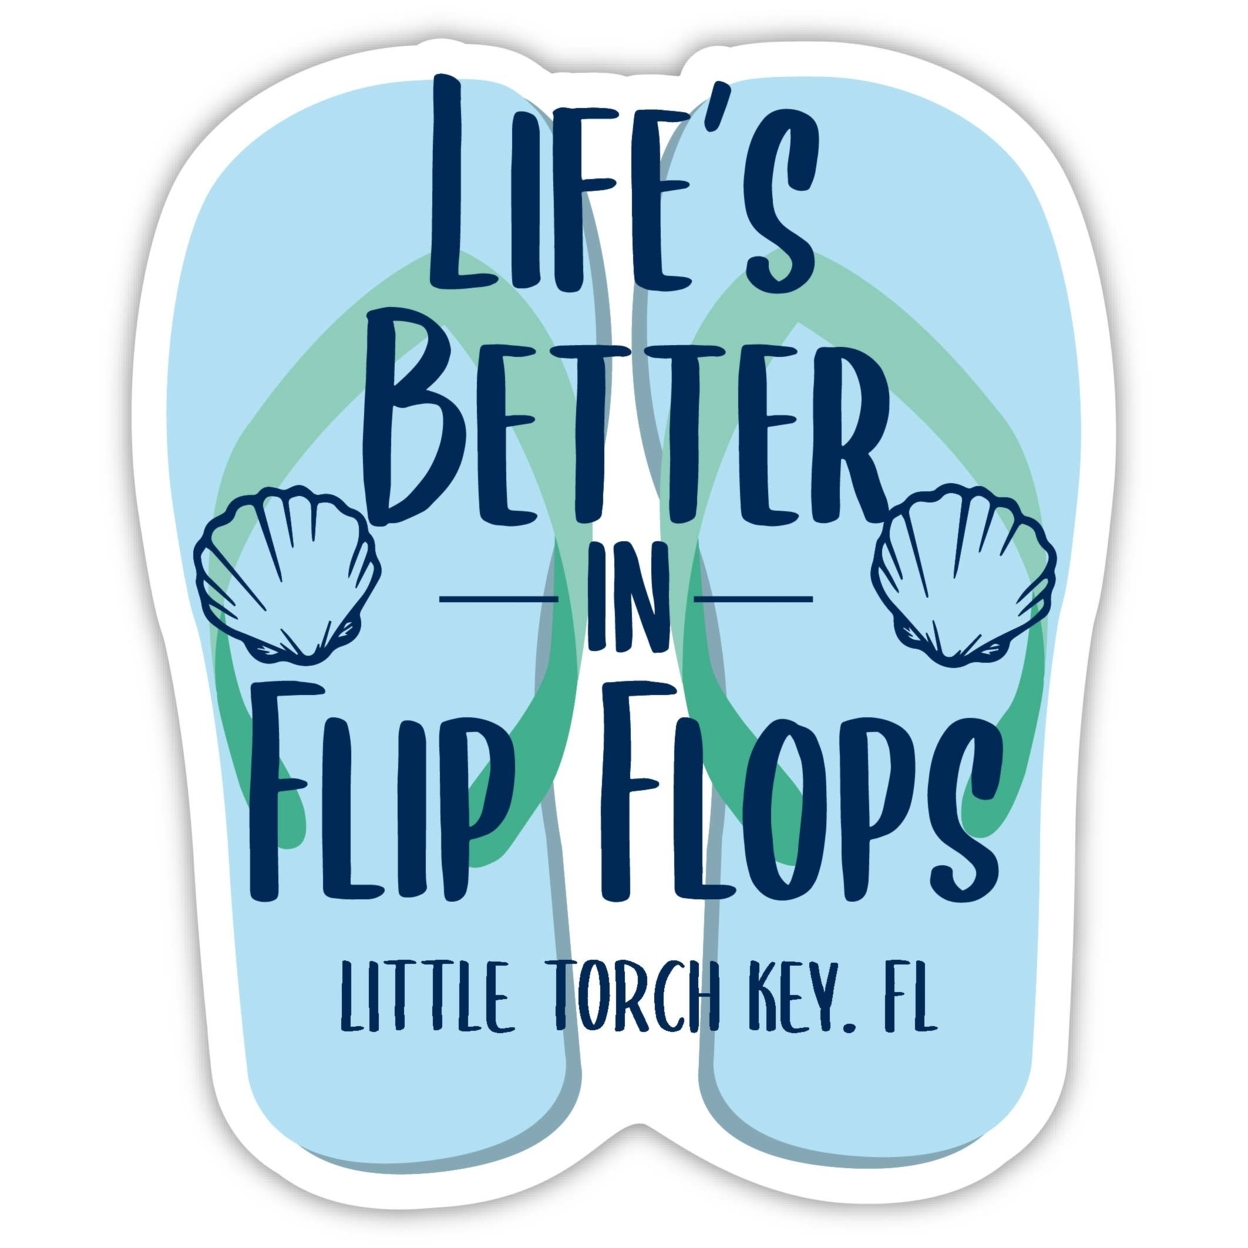 Little Torch Key Florida Souvenir 4 Inch Vinyl Decal Sticker Flip Flop Design